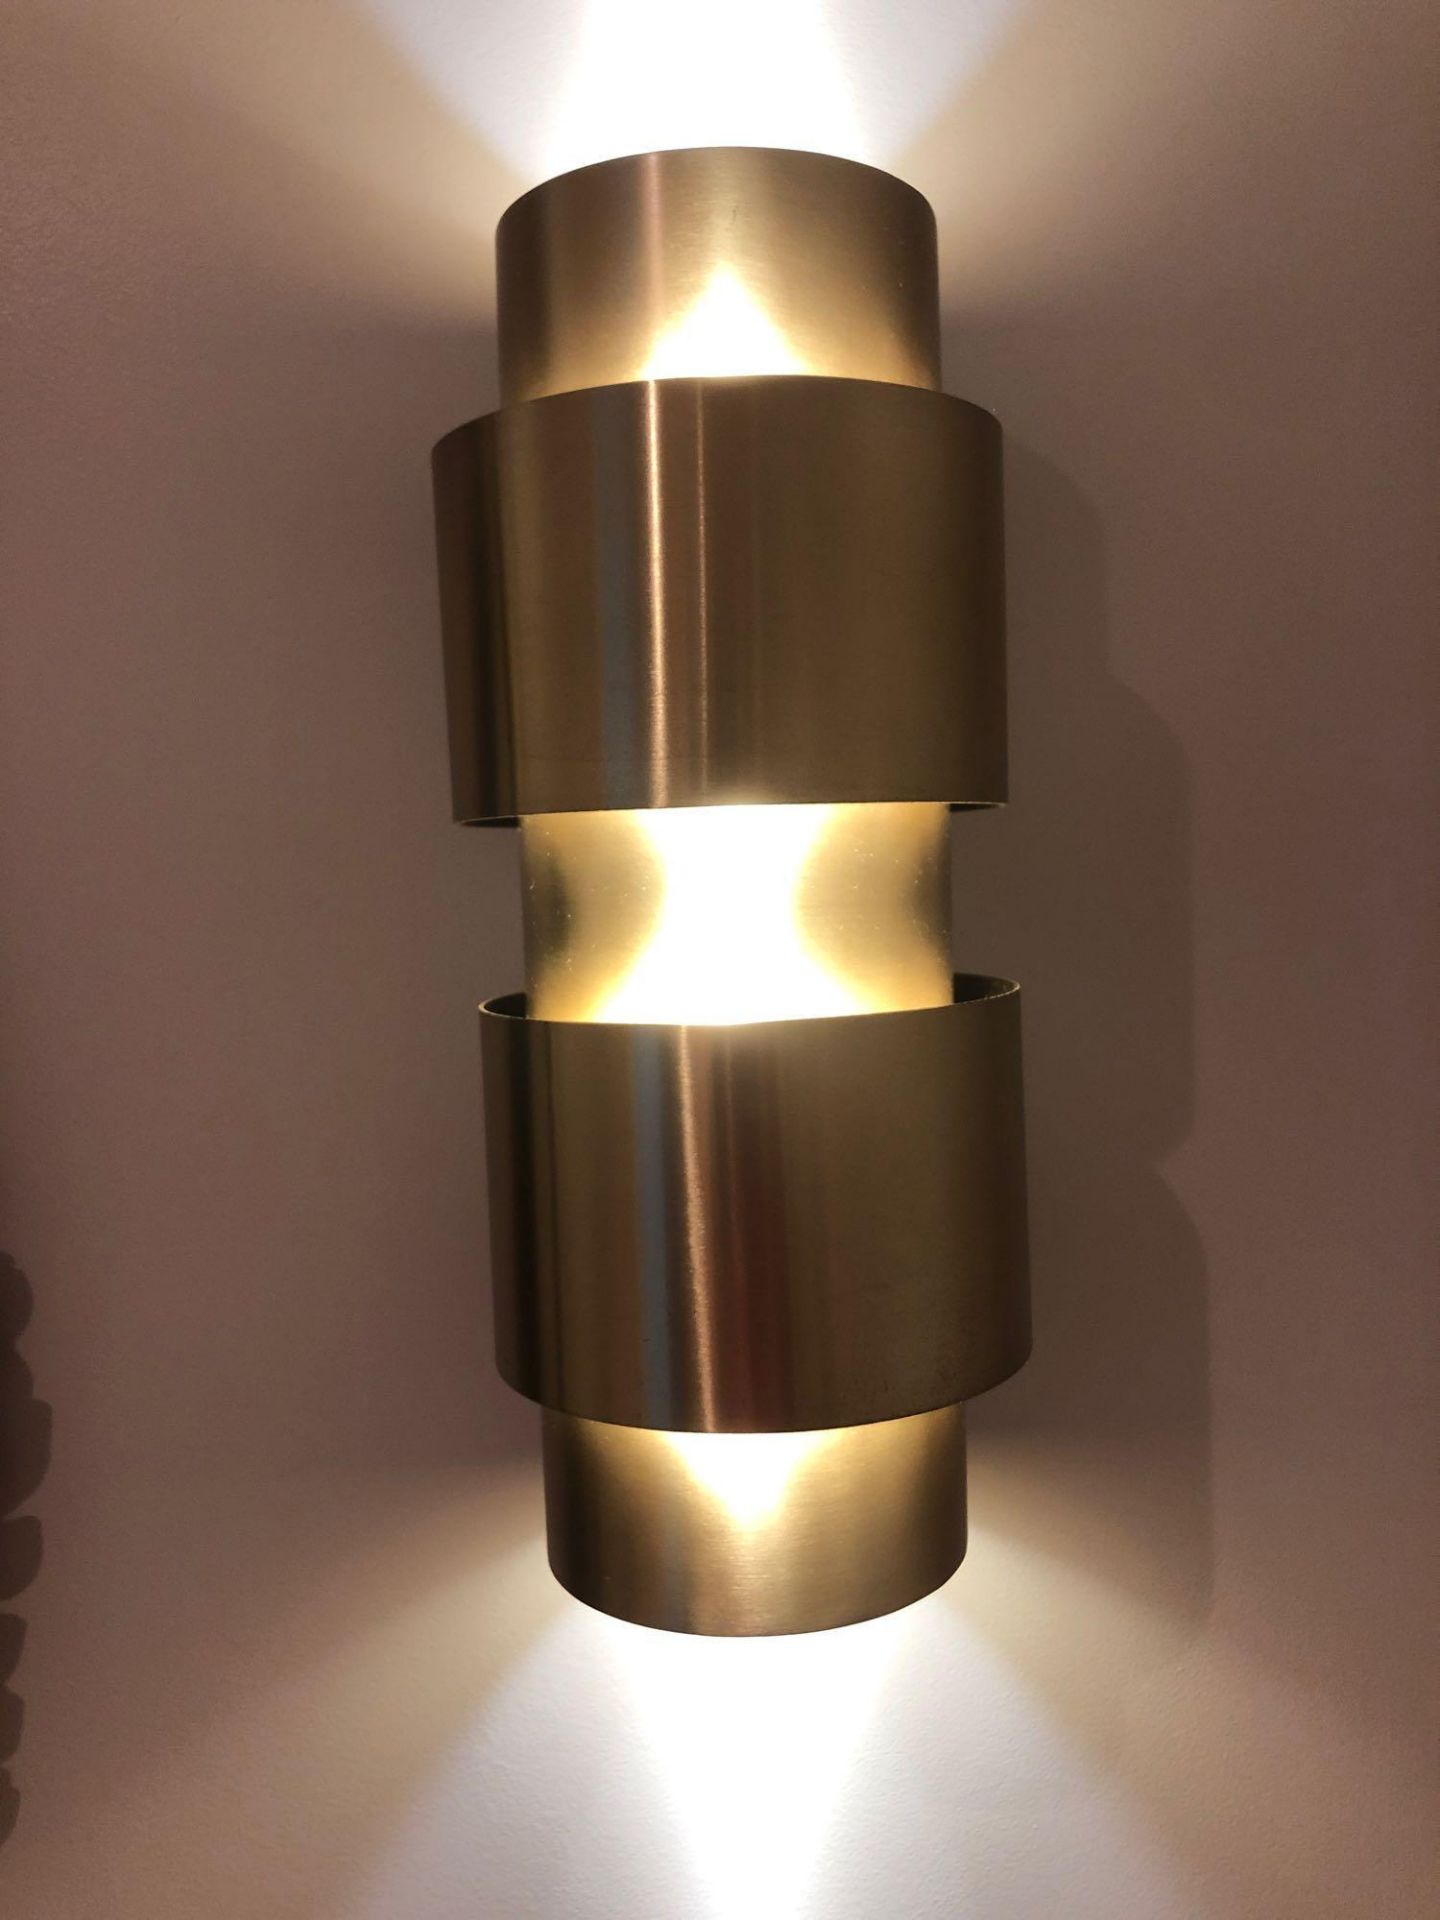 2 x LED Antique Brass 2 Light Indoor Wall Light Antique Brass 30CM (Room 232)